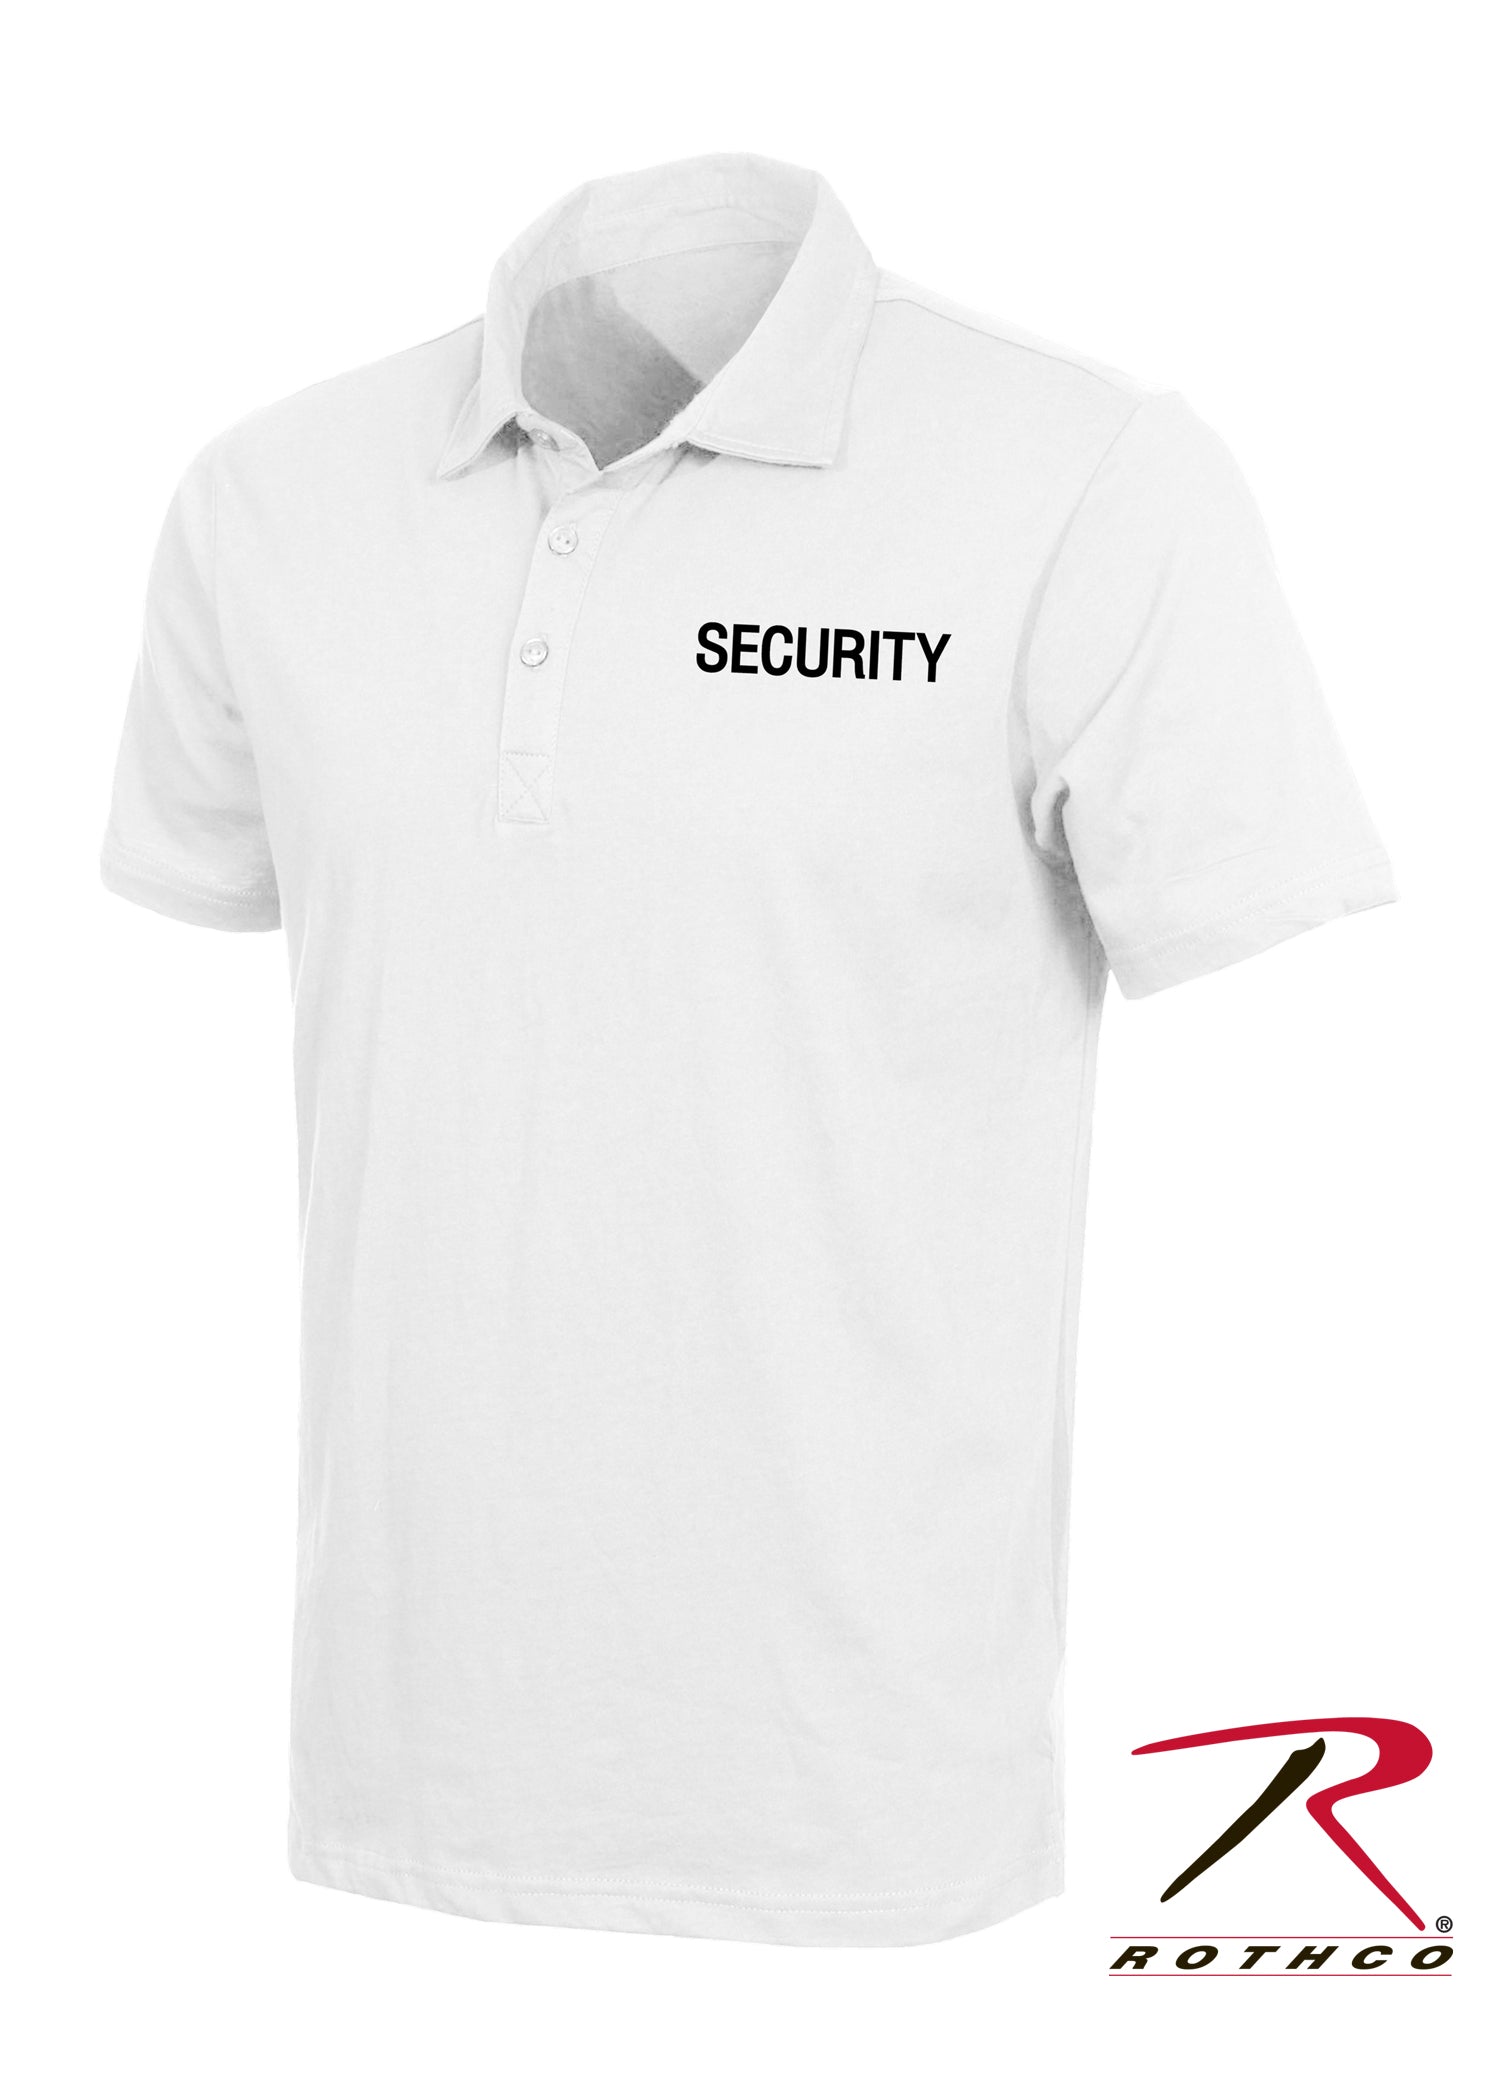 Moisture Wicking 'Security' Polo Shirt